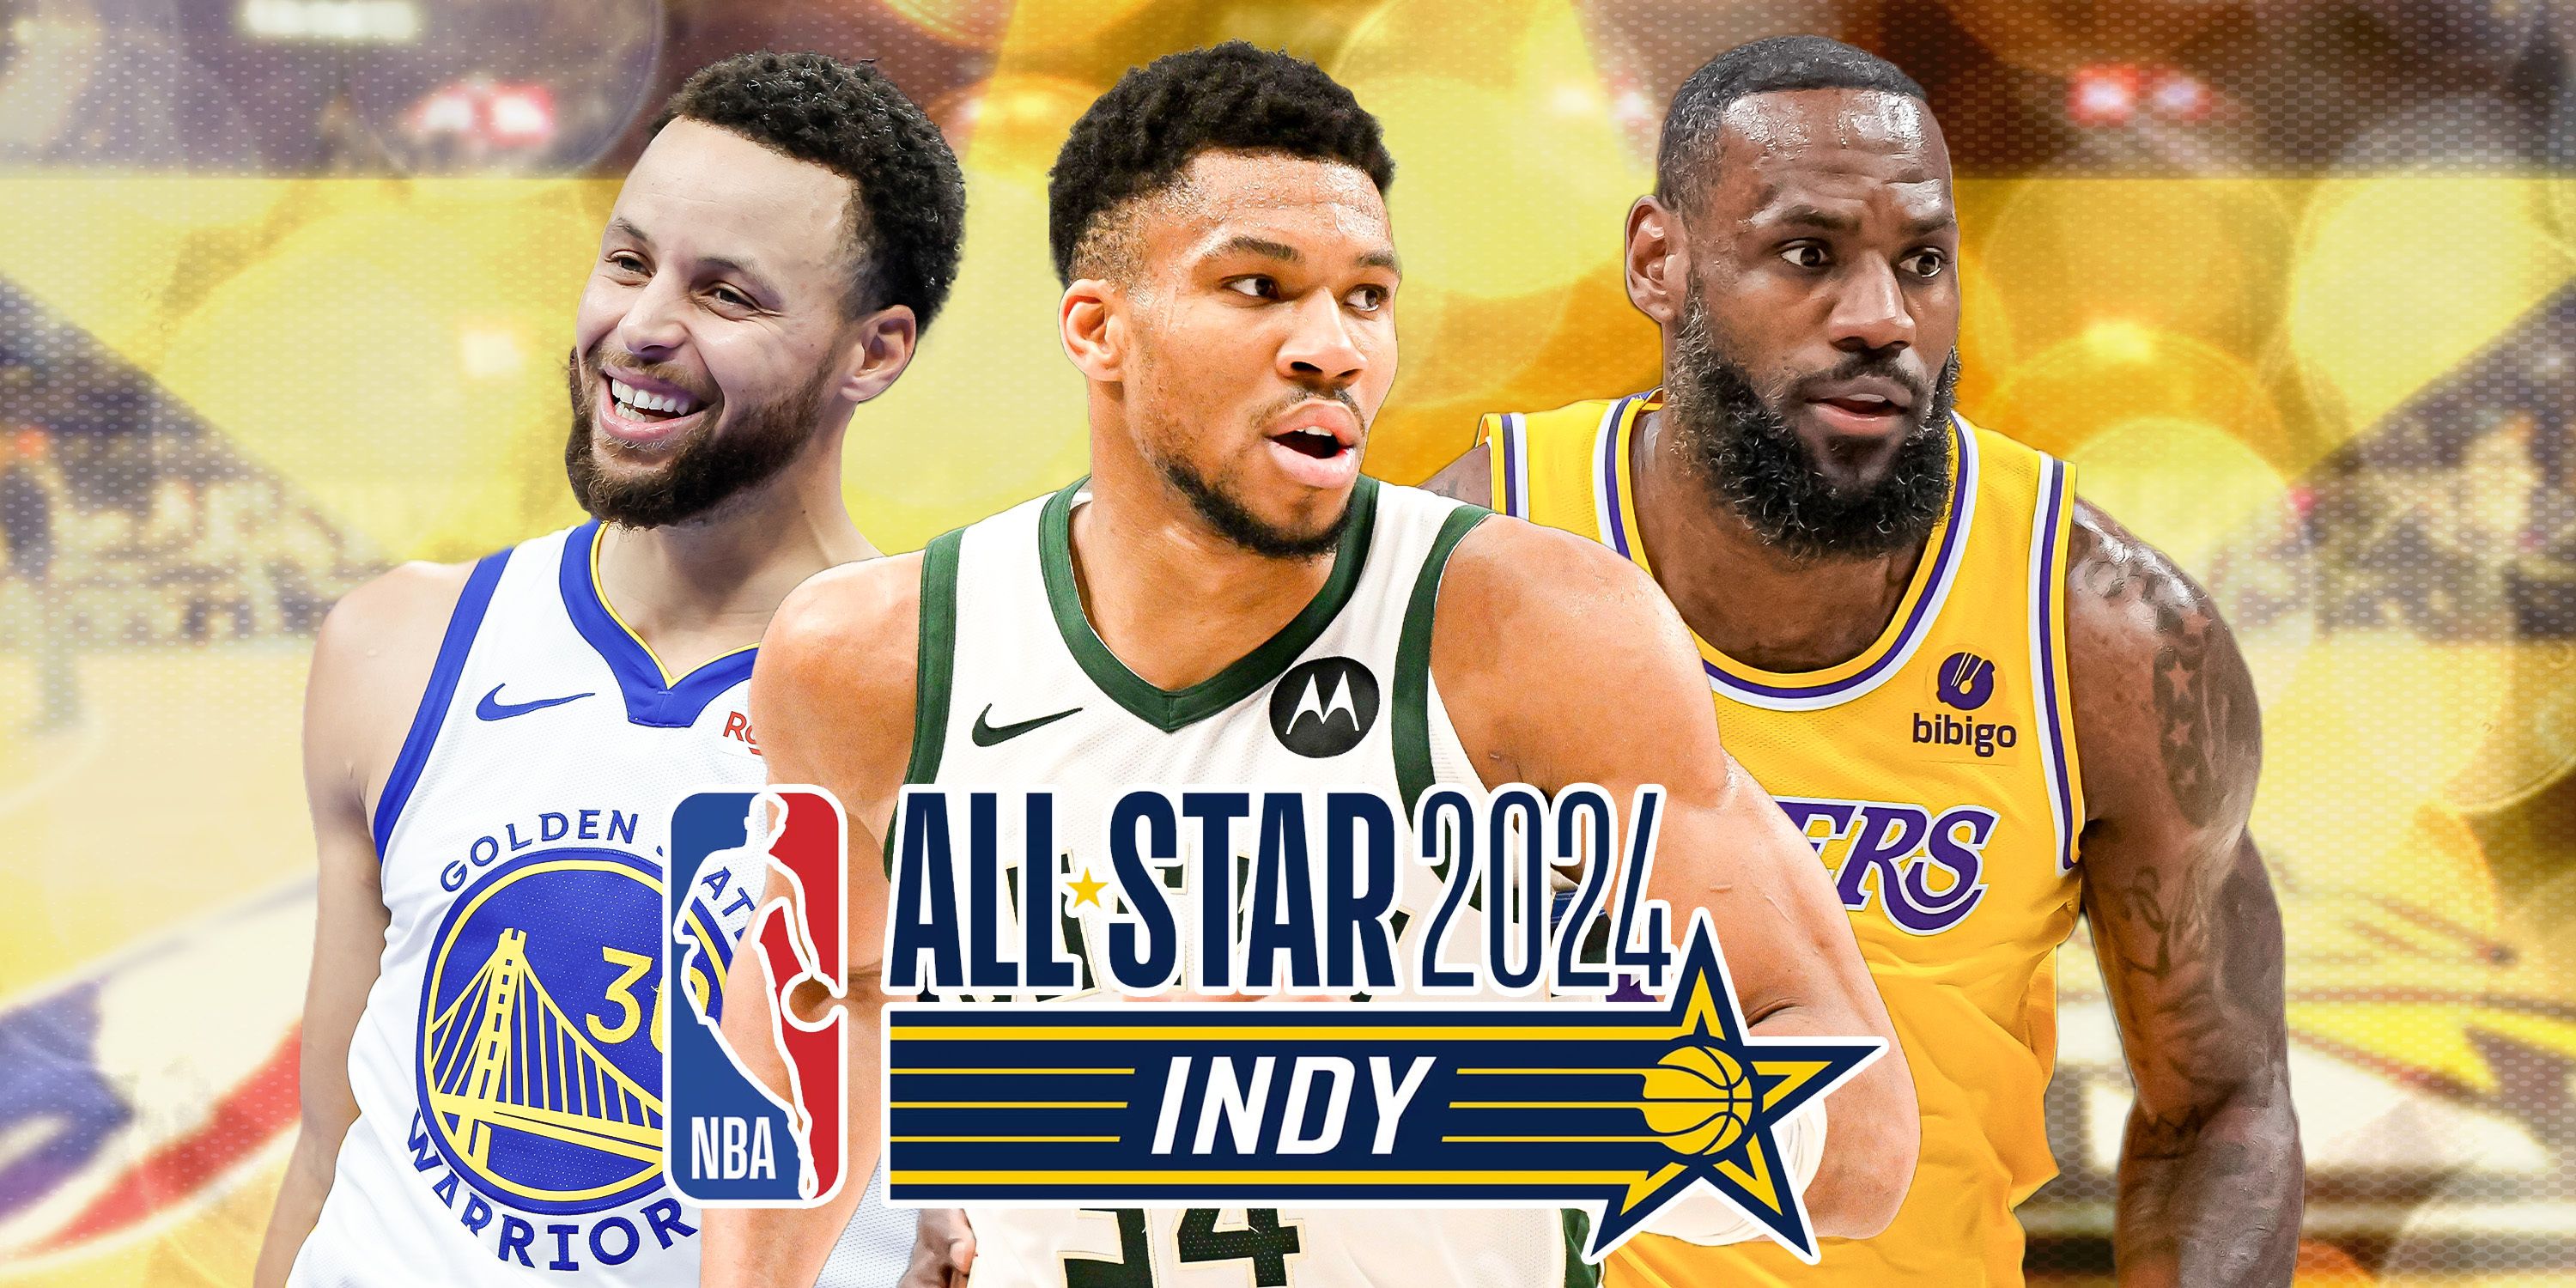 NBA_NTK All star